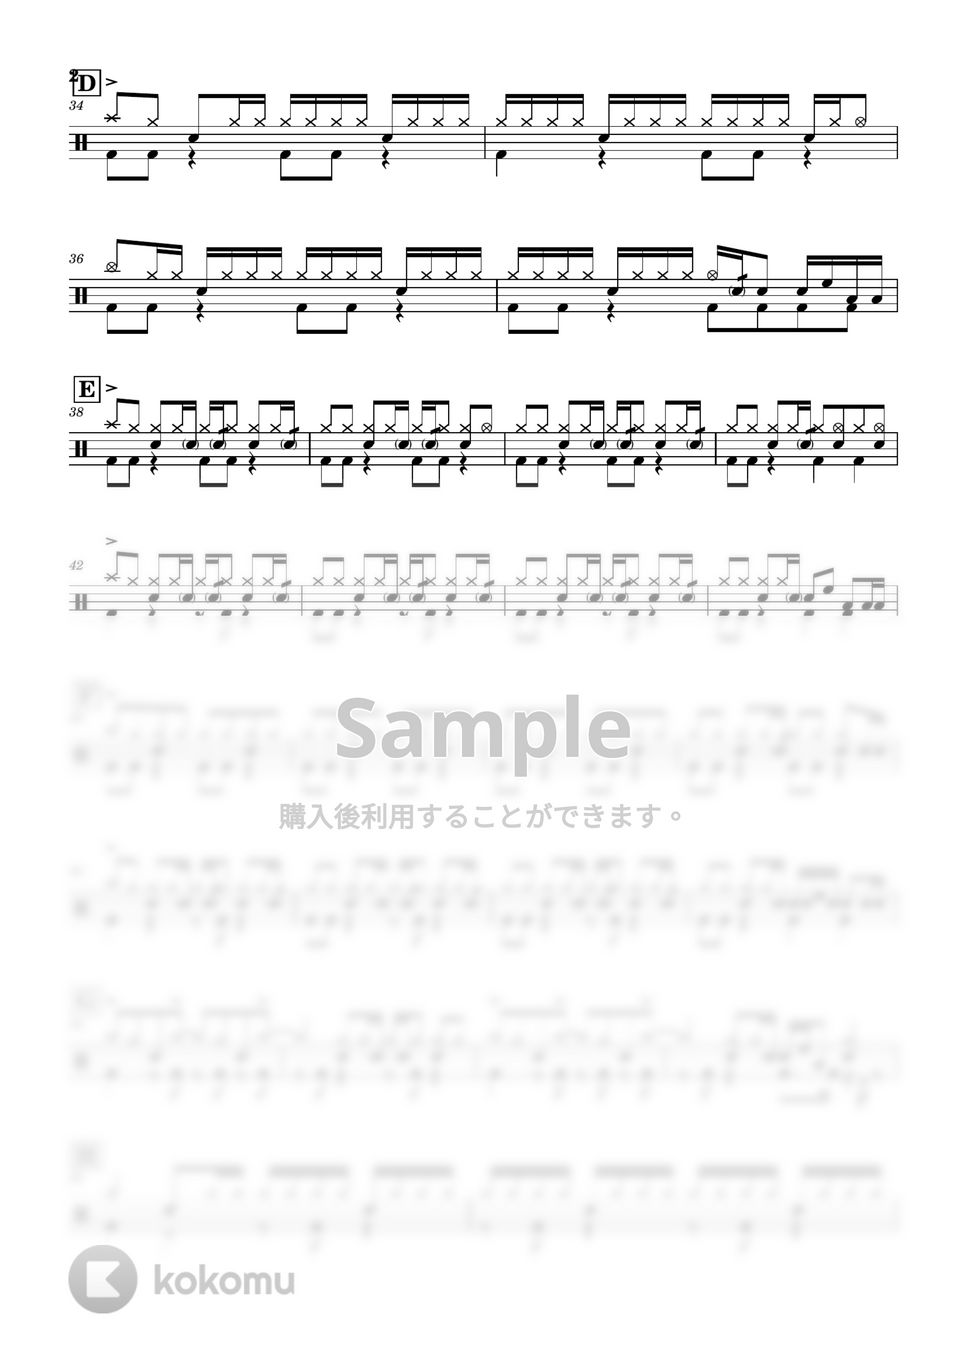 Saucy Dog - 【ドラム楽譜】 シンデレラボーイ / Saucy Dog - Cinderella Boy / Saucy Dog 【DrumScore】 by Cookie's Drum Score